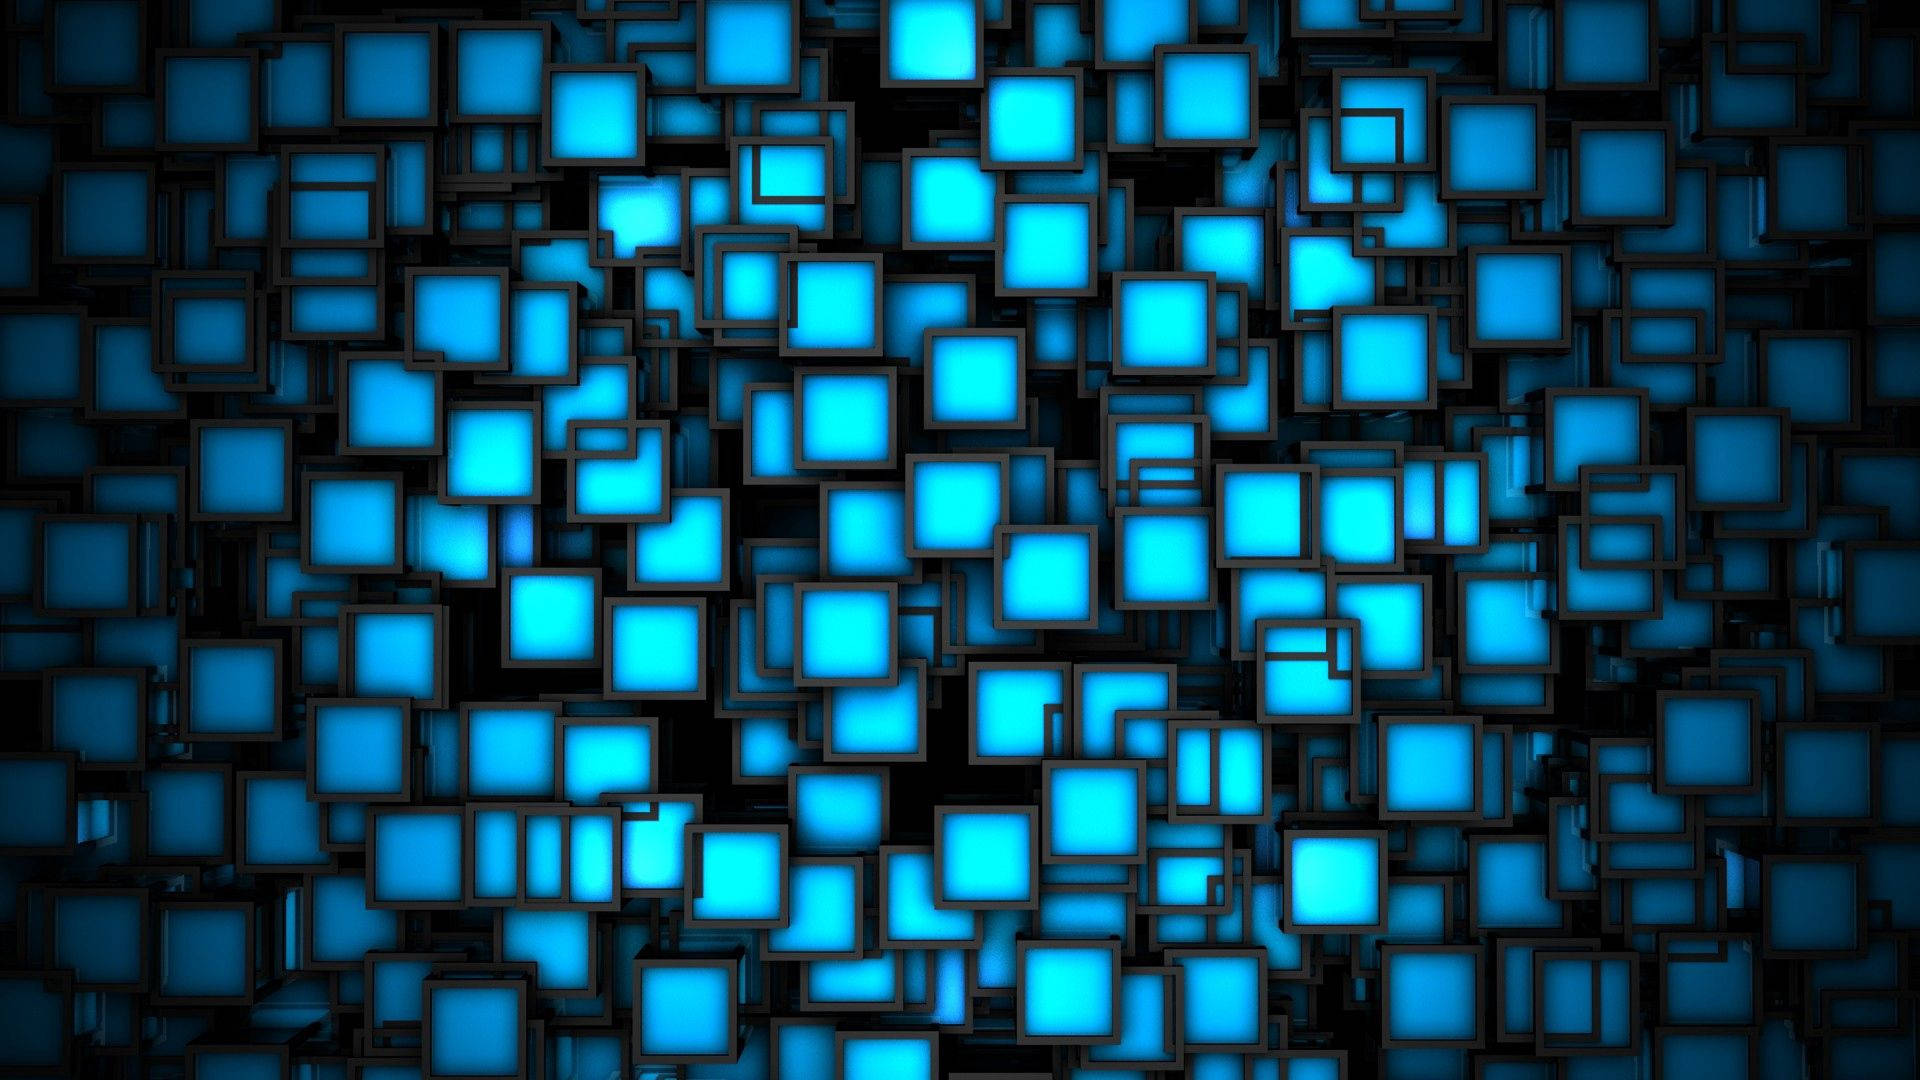 Download Blue Squares In Black Wallpaper